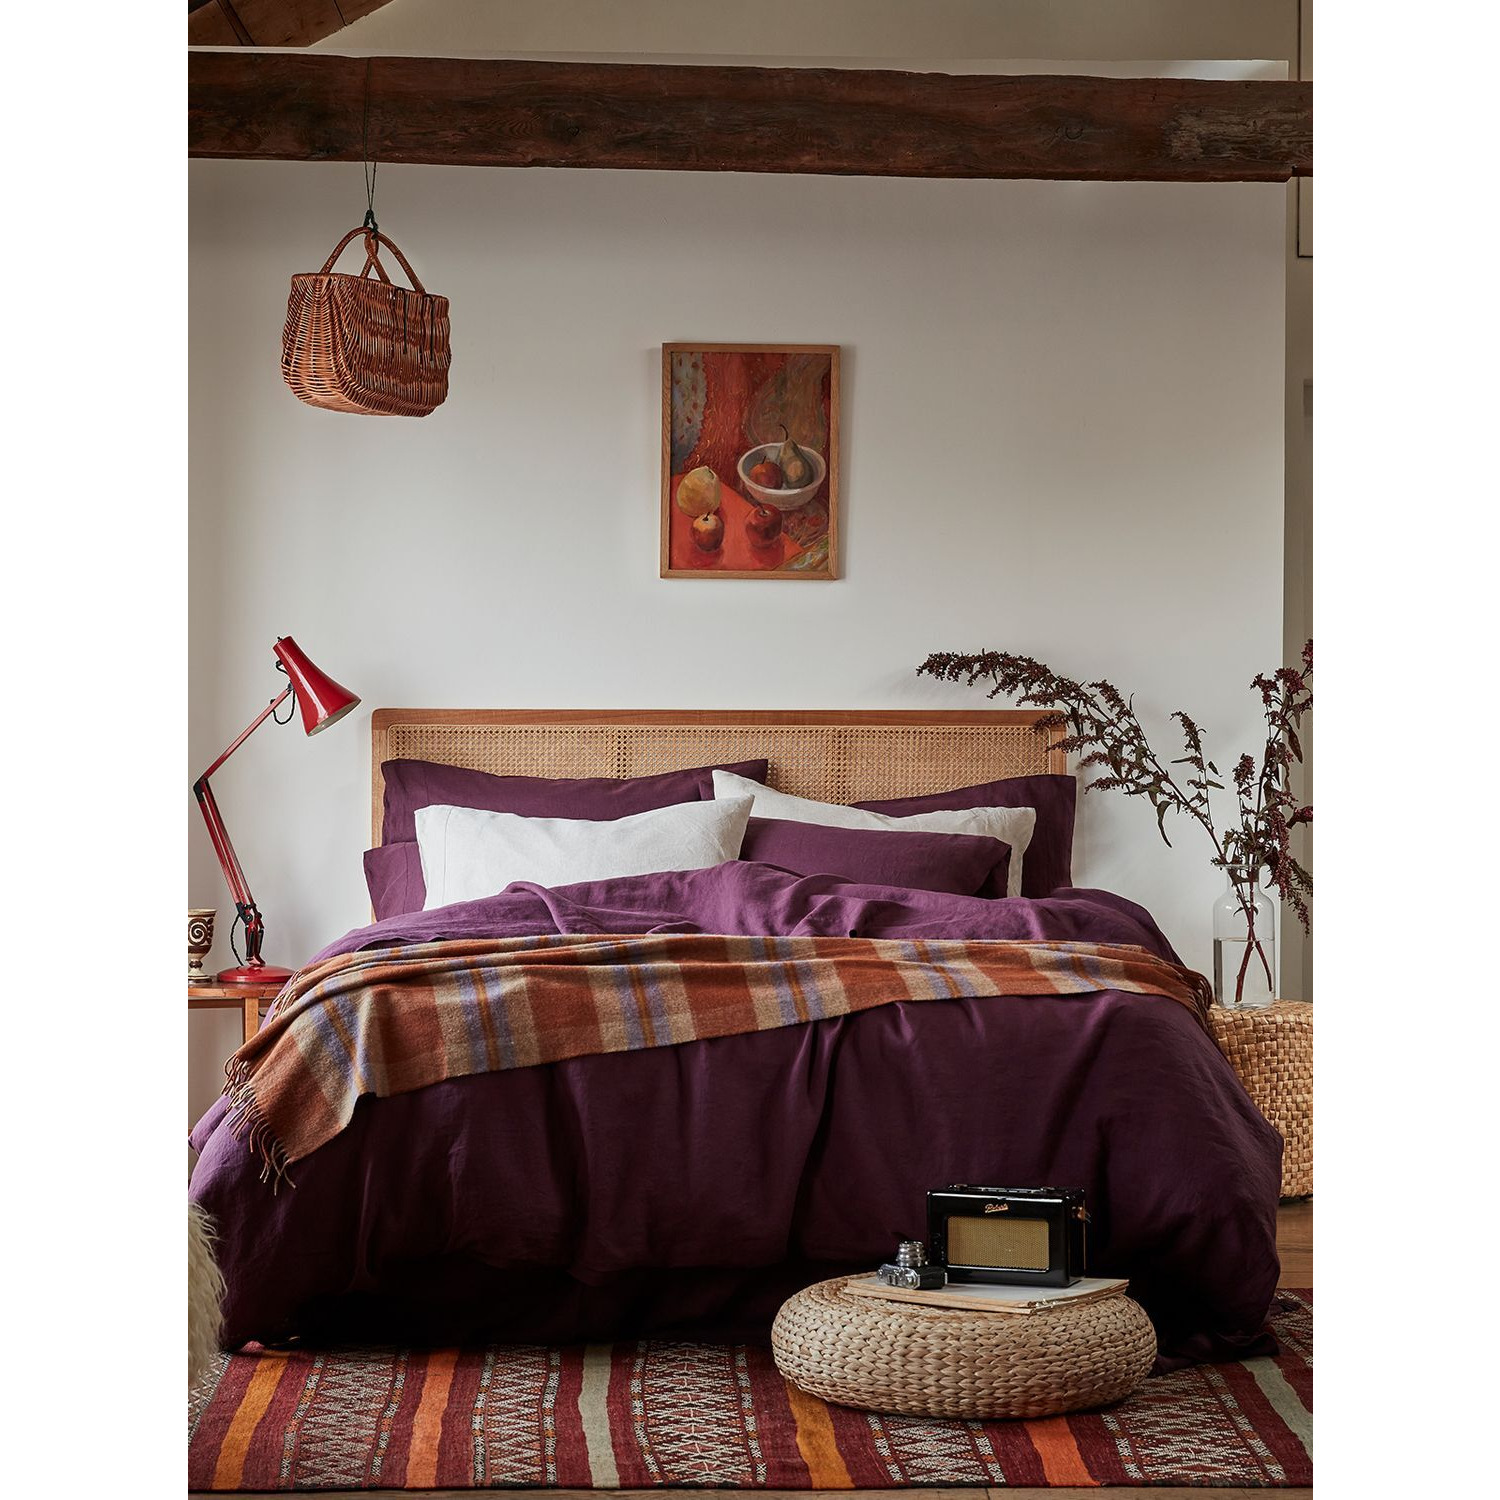 Piglet in Bed Cabin Wool Blanket, L185 x W140cm - image 1